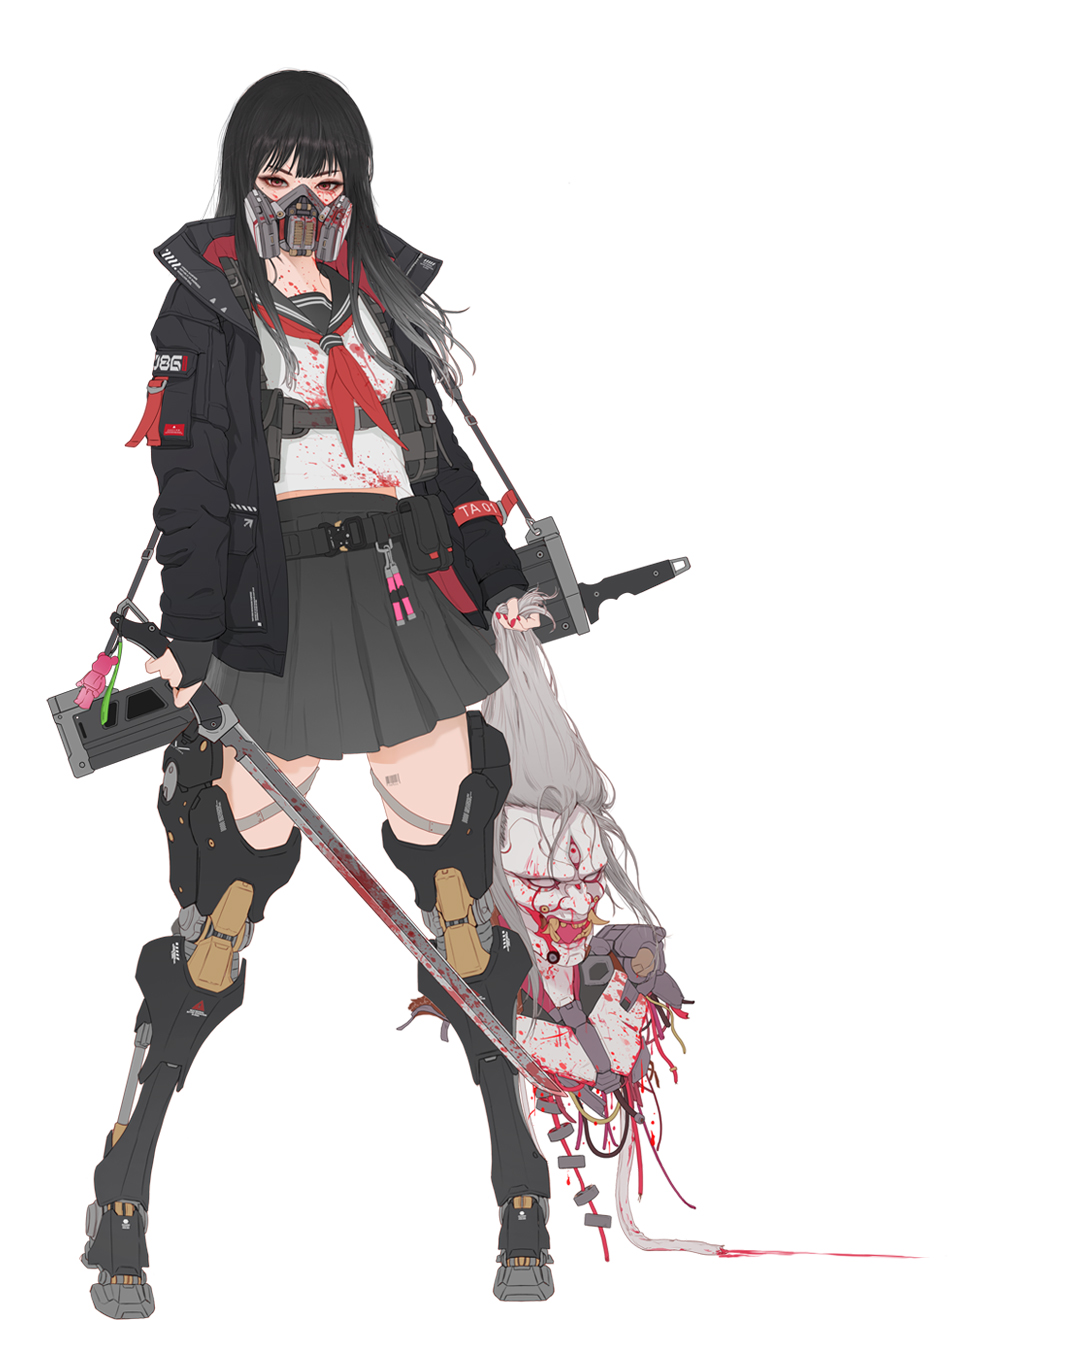 Gharliera Cyberpunk Cybernetics Anime Girls School Uniform 1080x1350